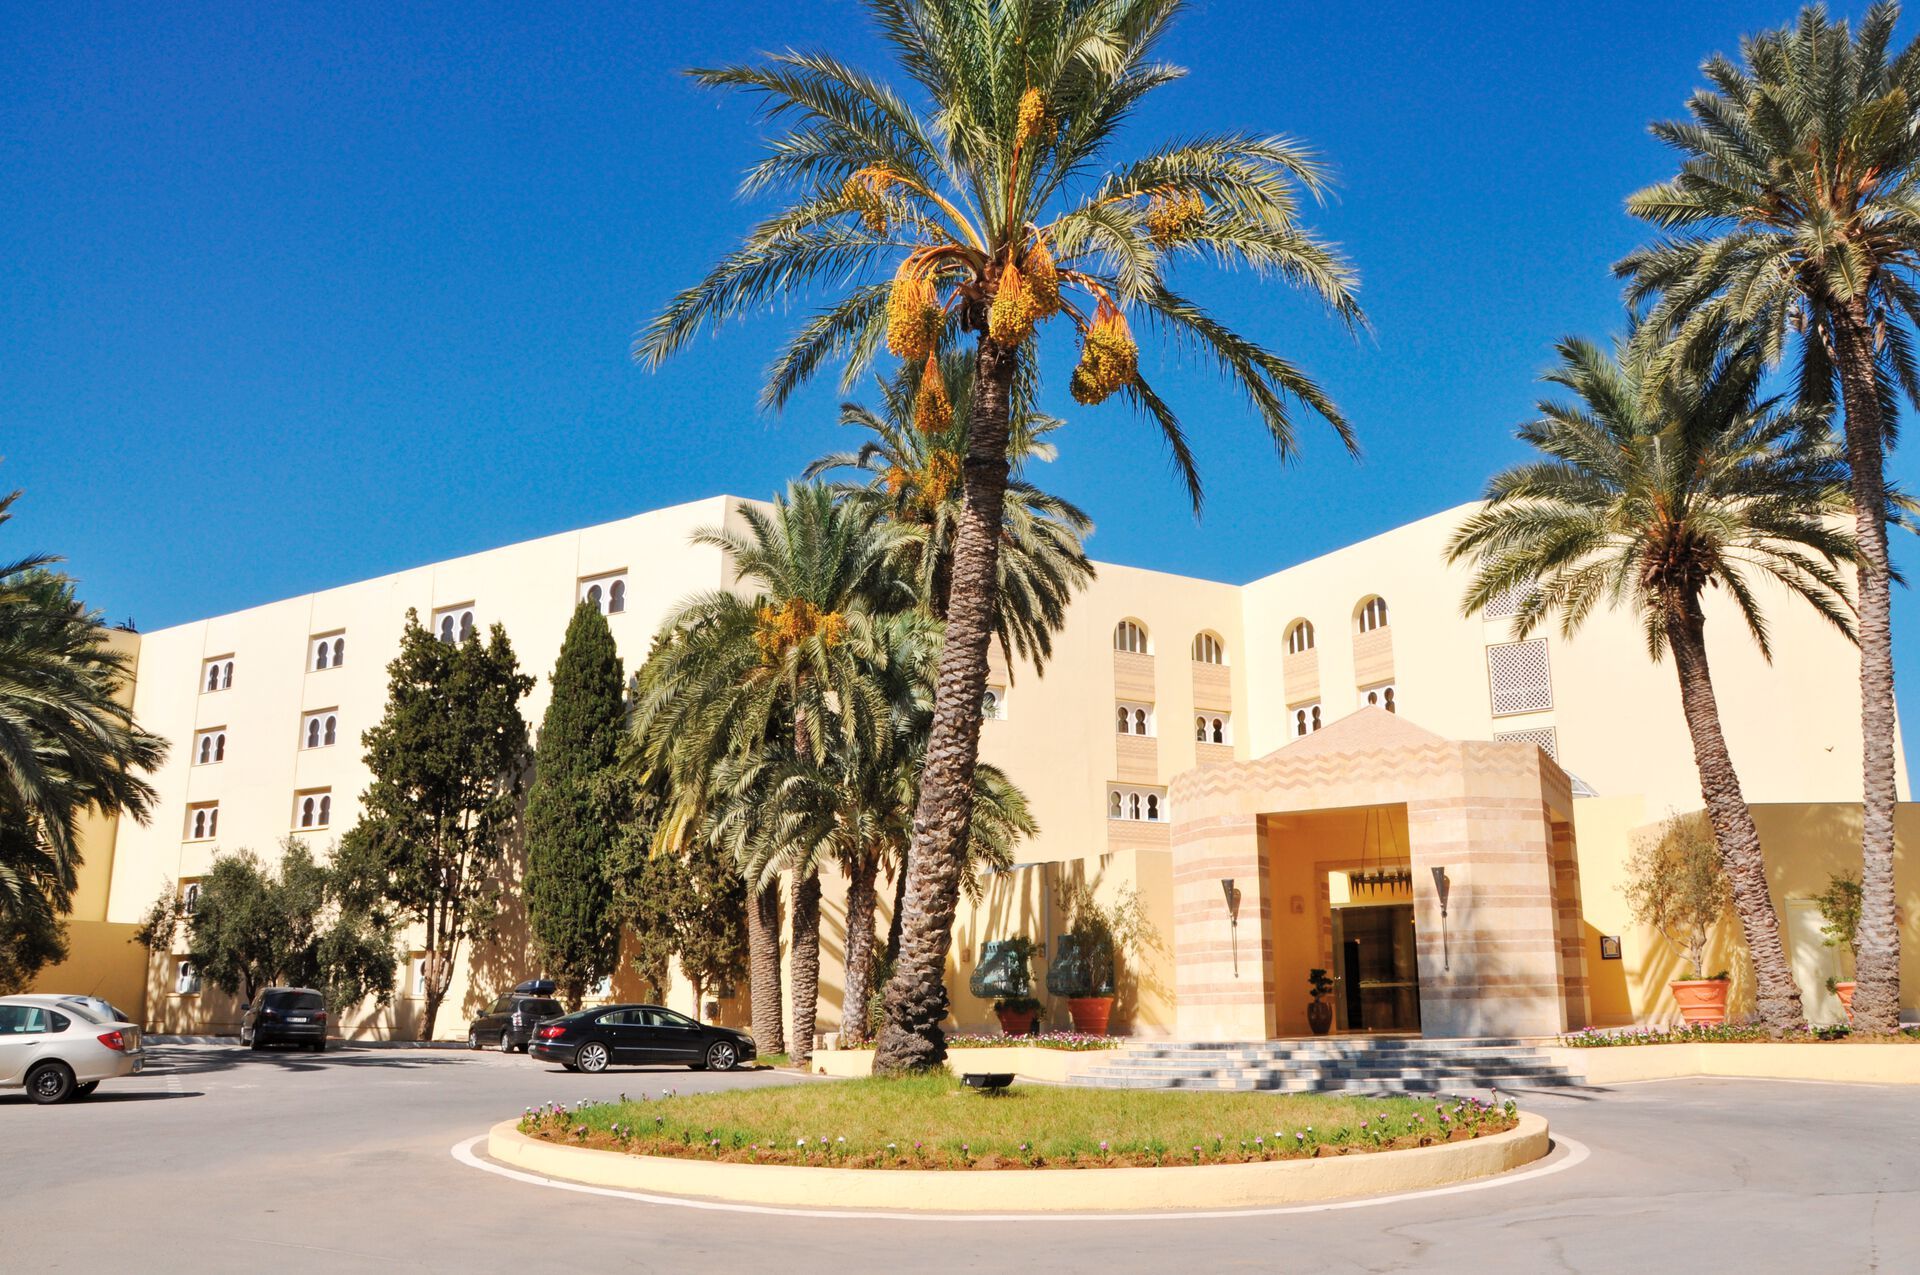 Tunisie - Sousse - Hôtel Marhaba Club 4*